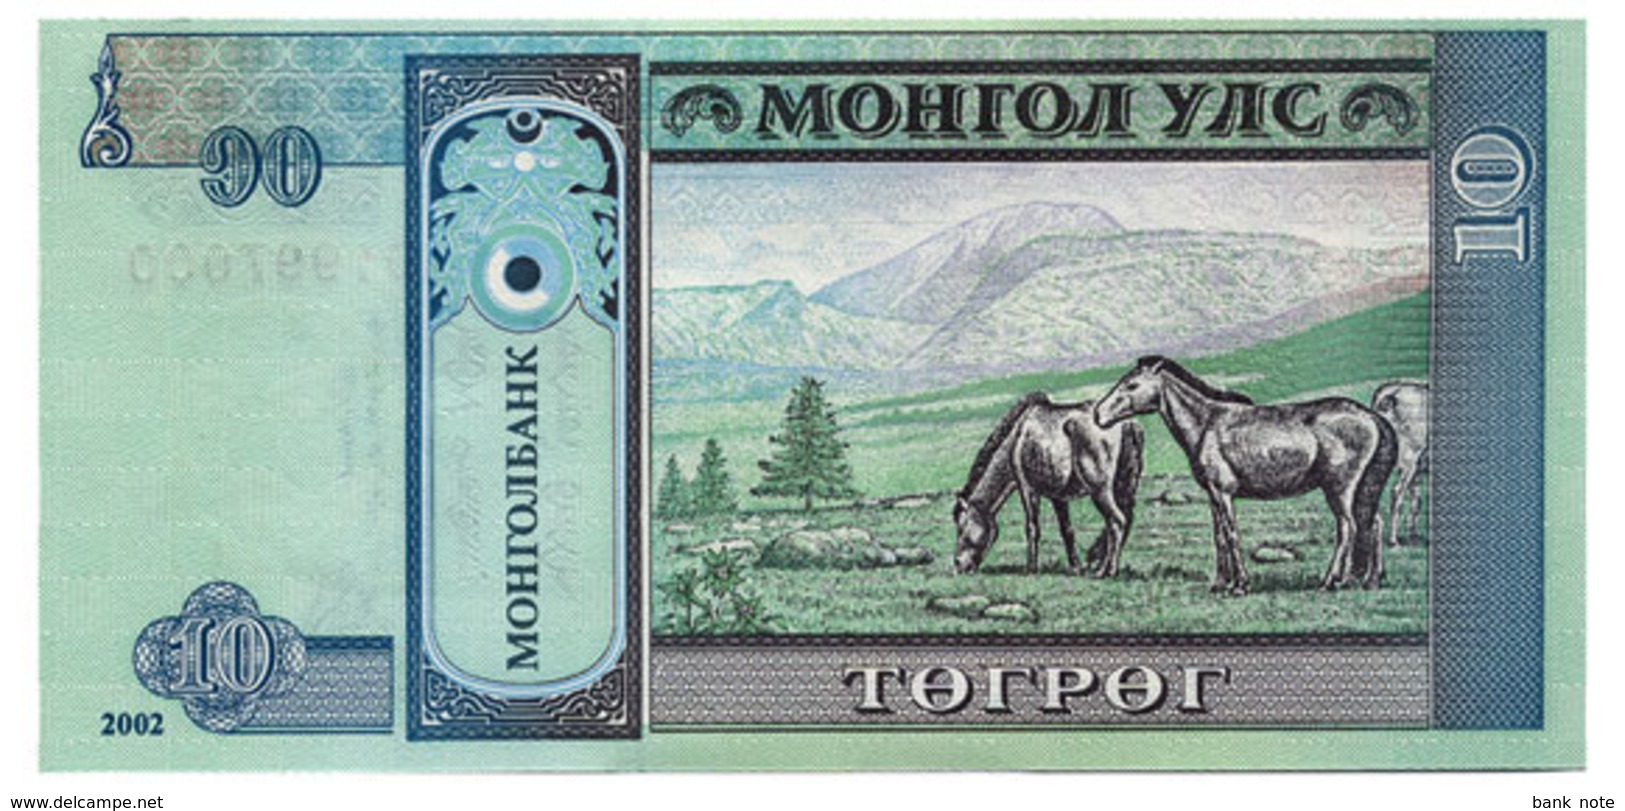 MONGOLIA 10 TUGRIK 2002 Pick 62b Unc - Mongolia